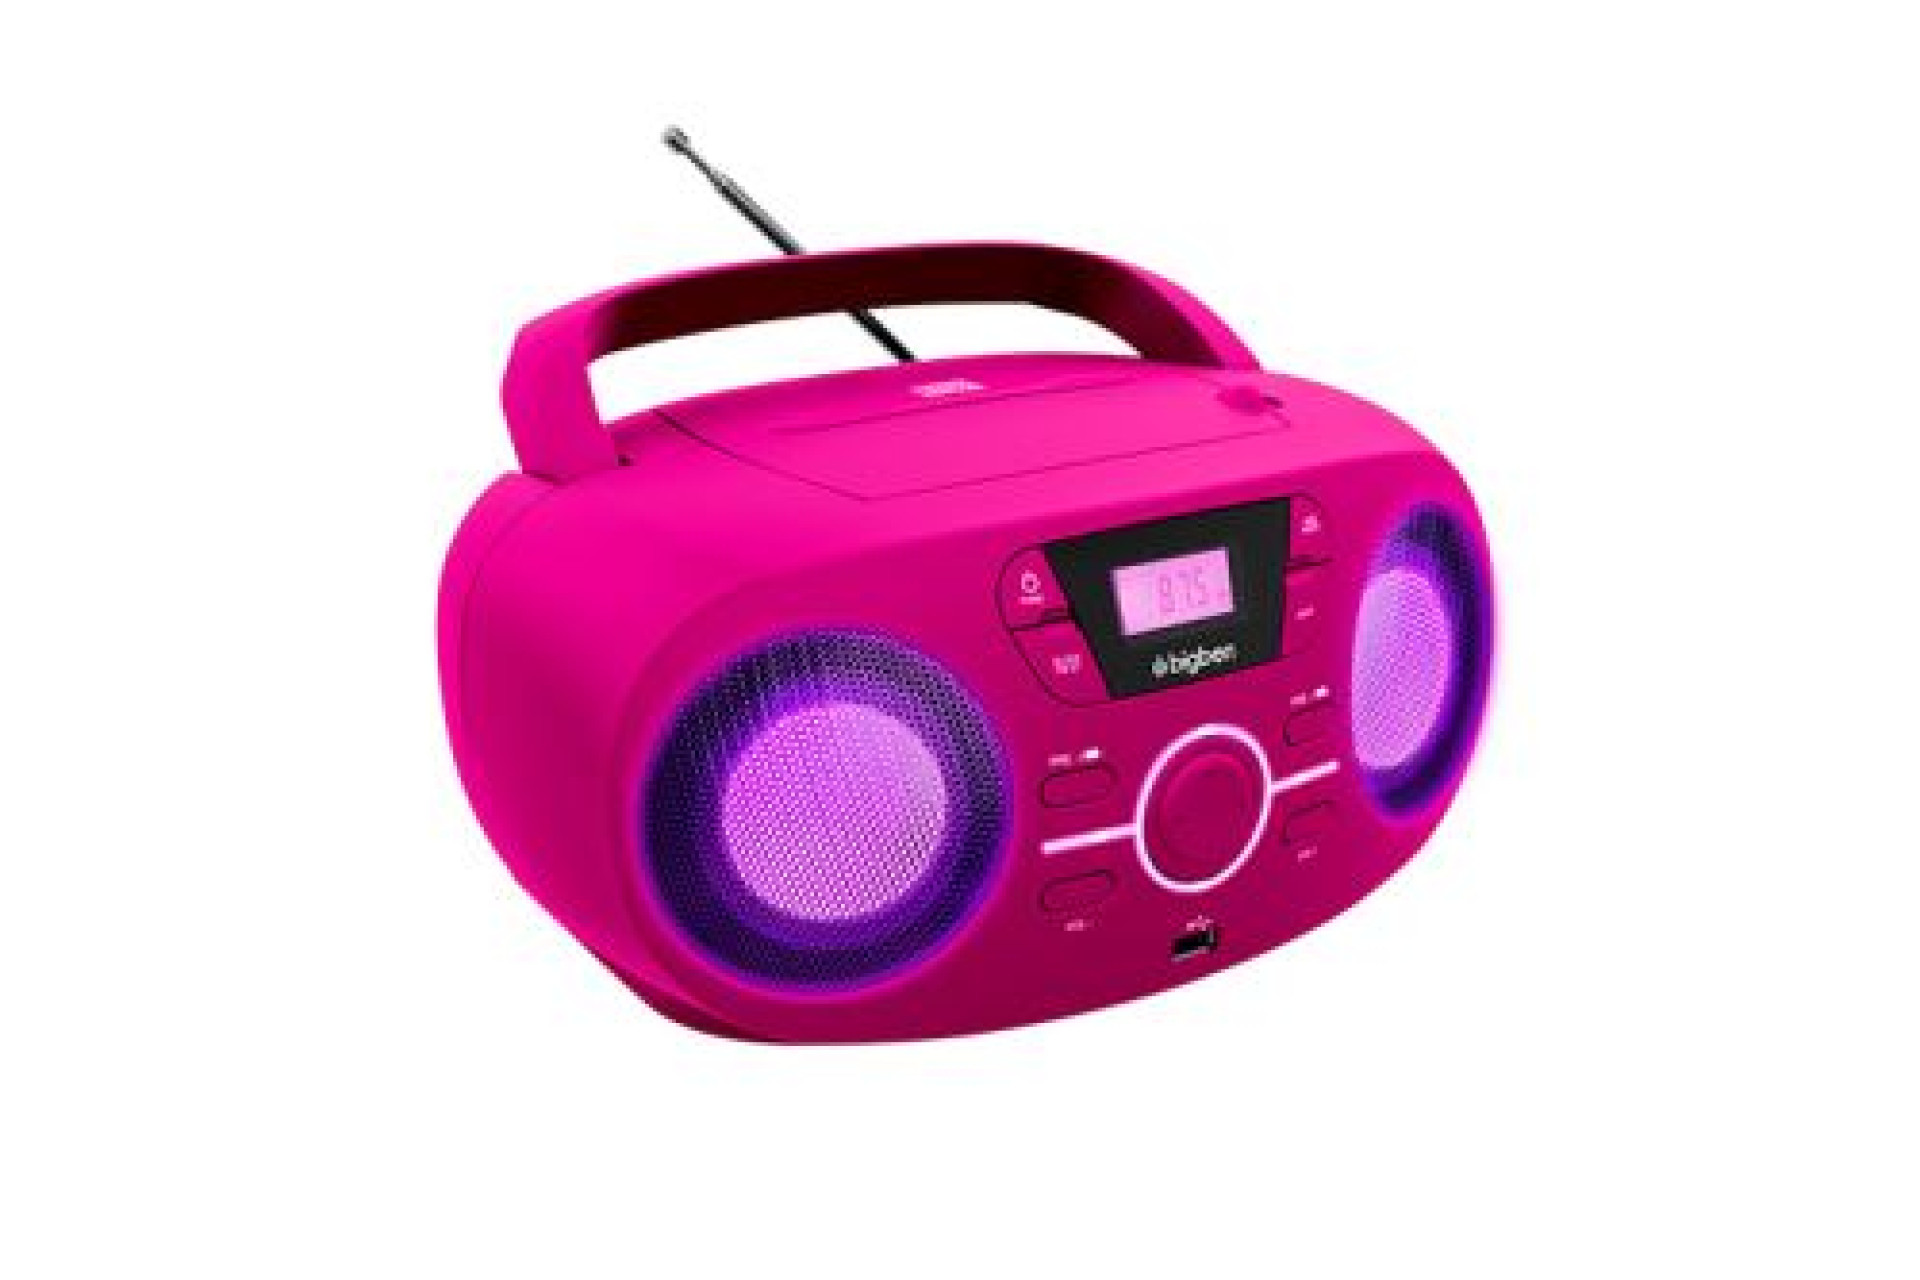 Acheter Lecteur Radio CD Port USB BigBen avec effets lumineux Rose